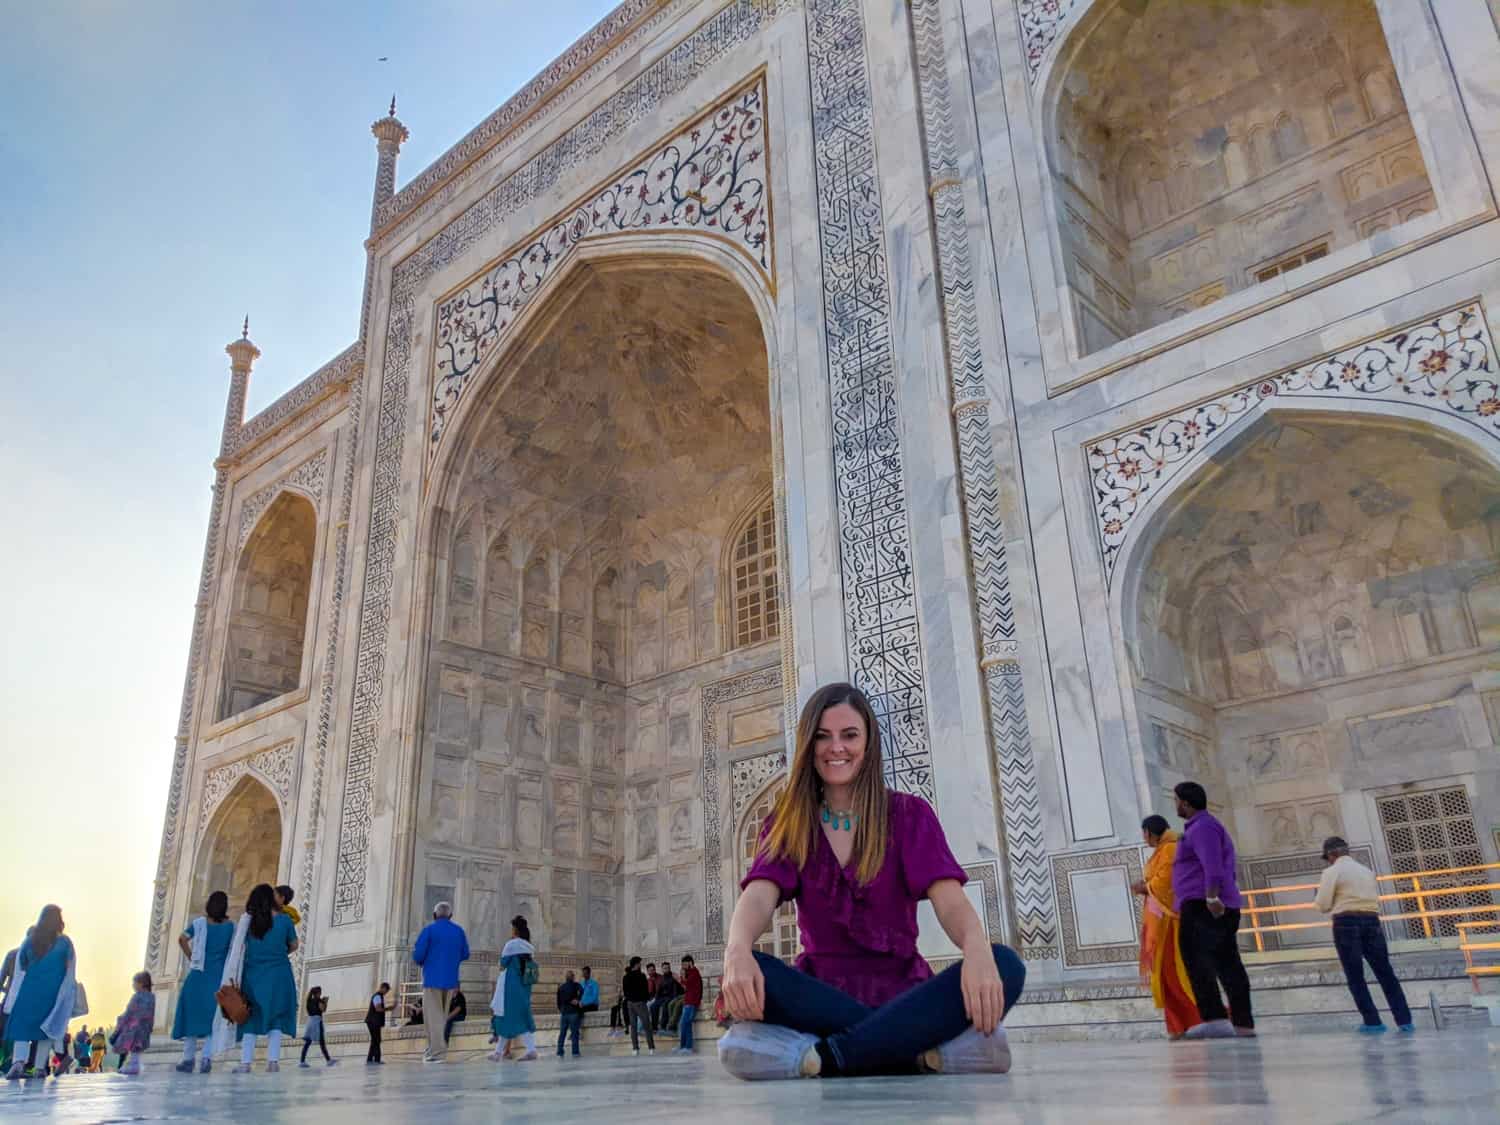 Lauren sitting in front of the Taj Mahal at sunset